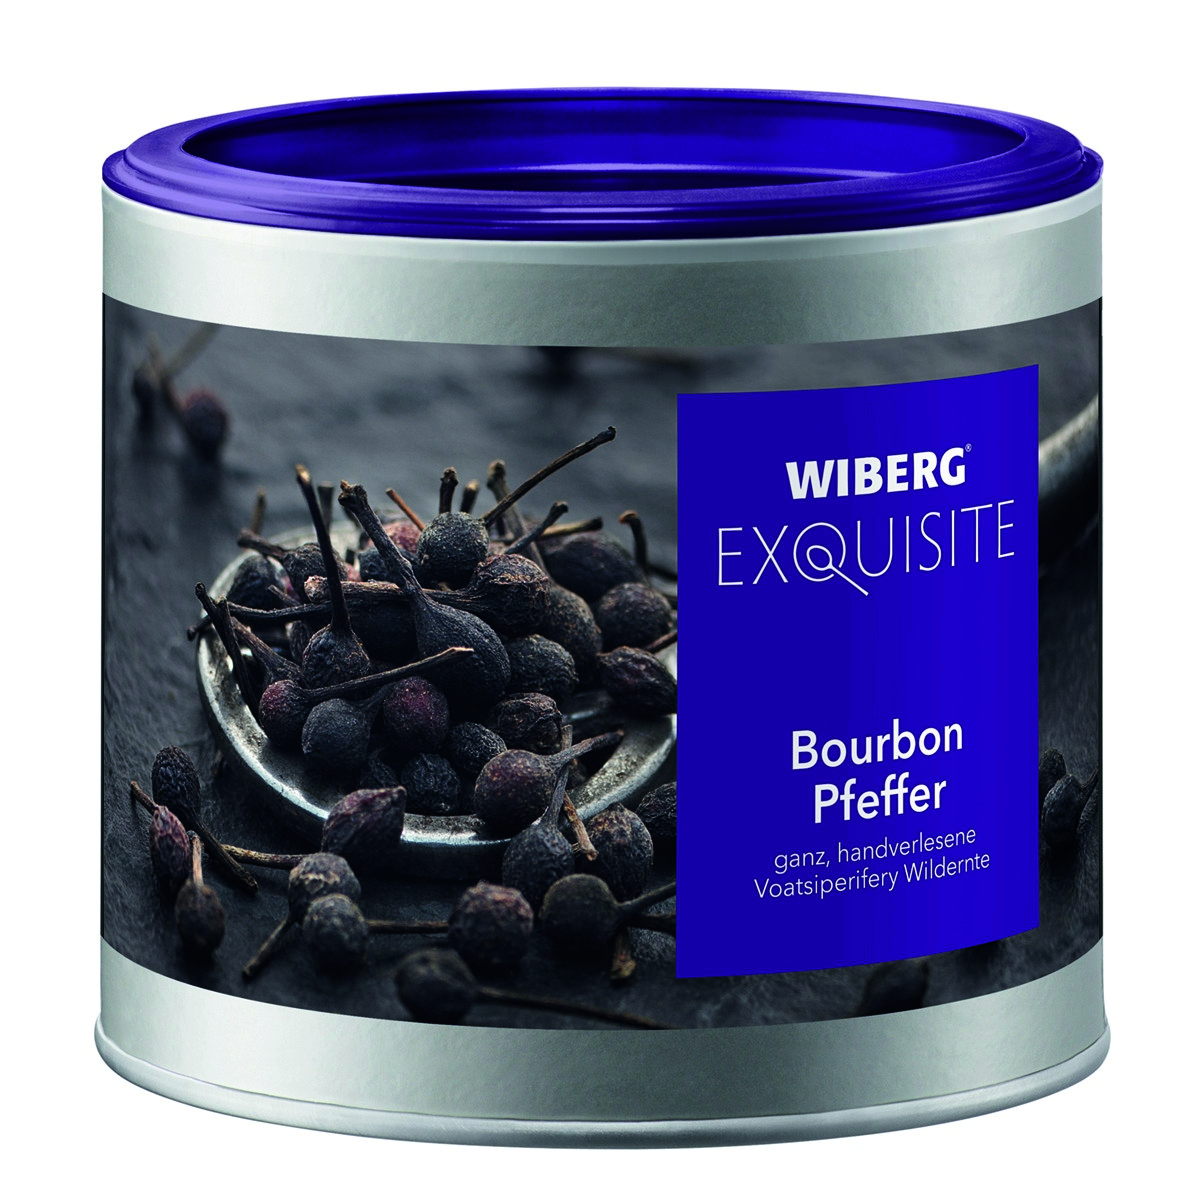 WIBERG Exquisite Bourbon Pfeffer